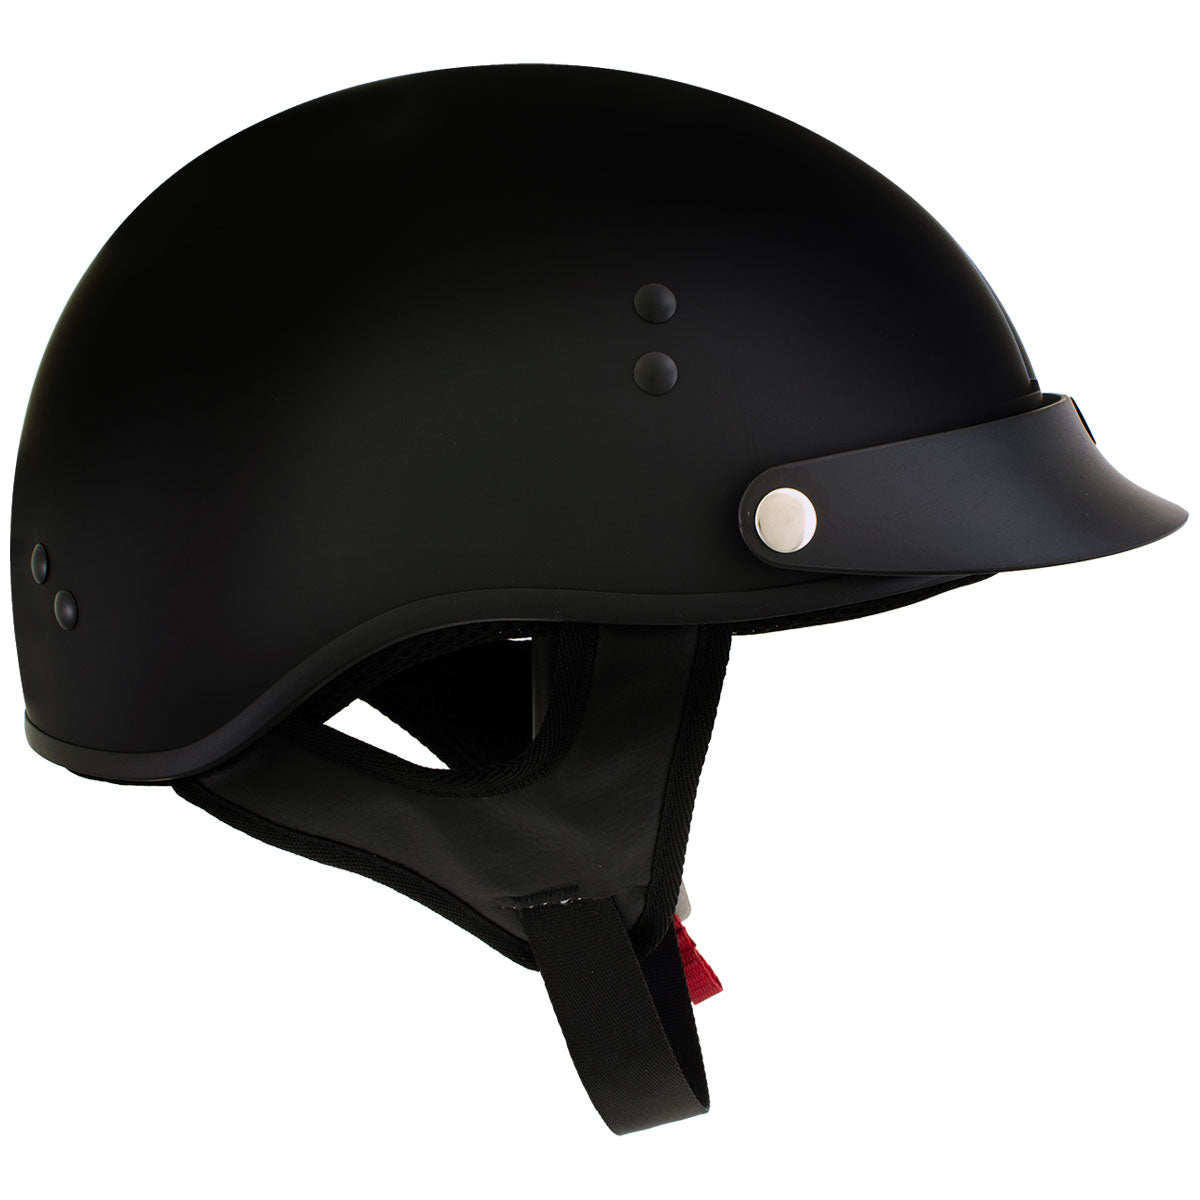 Hot Leathers HLT70 'Stealth' Flat Matte Black Motorcycle DOT Skull Cap Classic Half Helmet